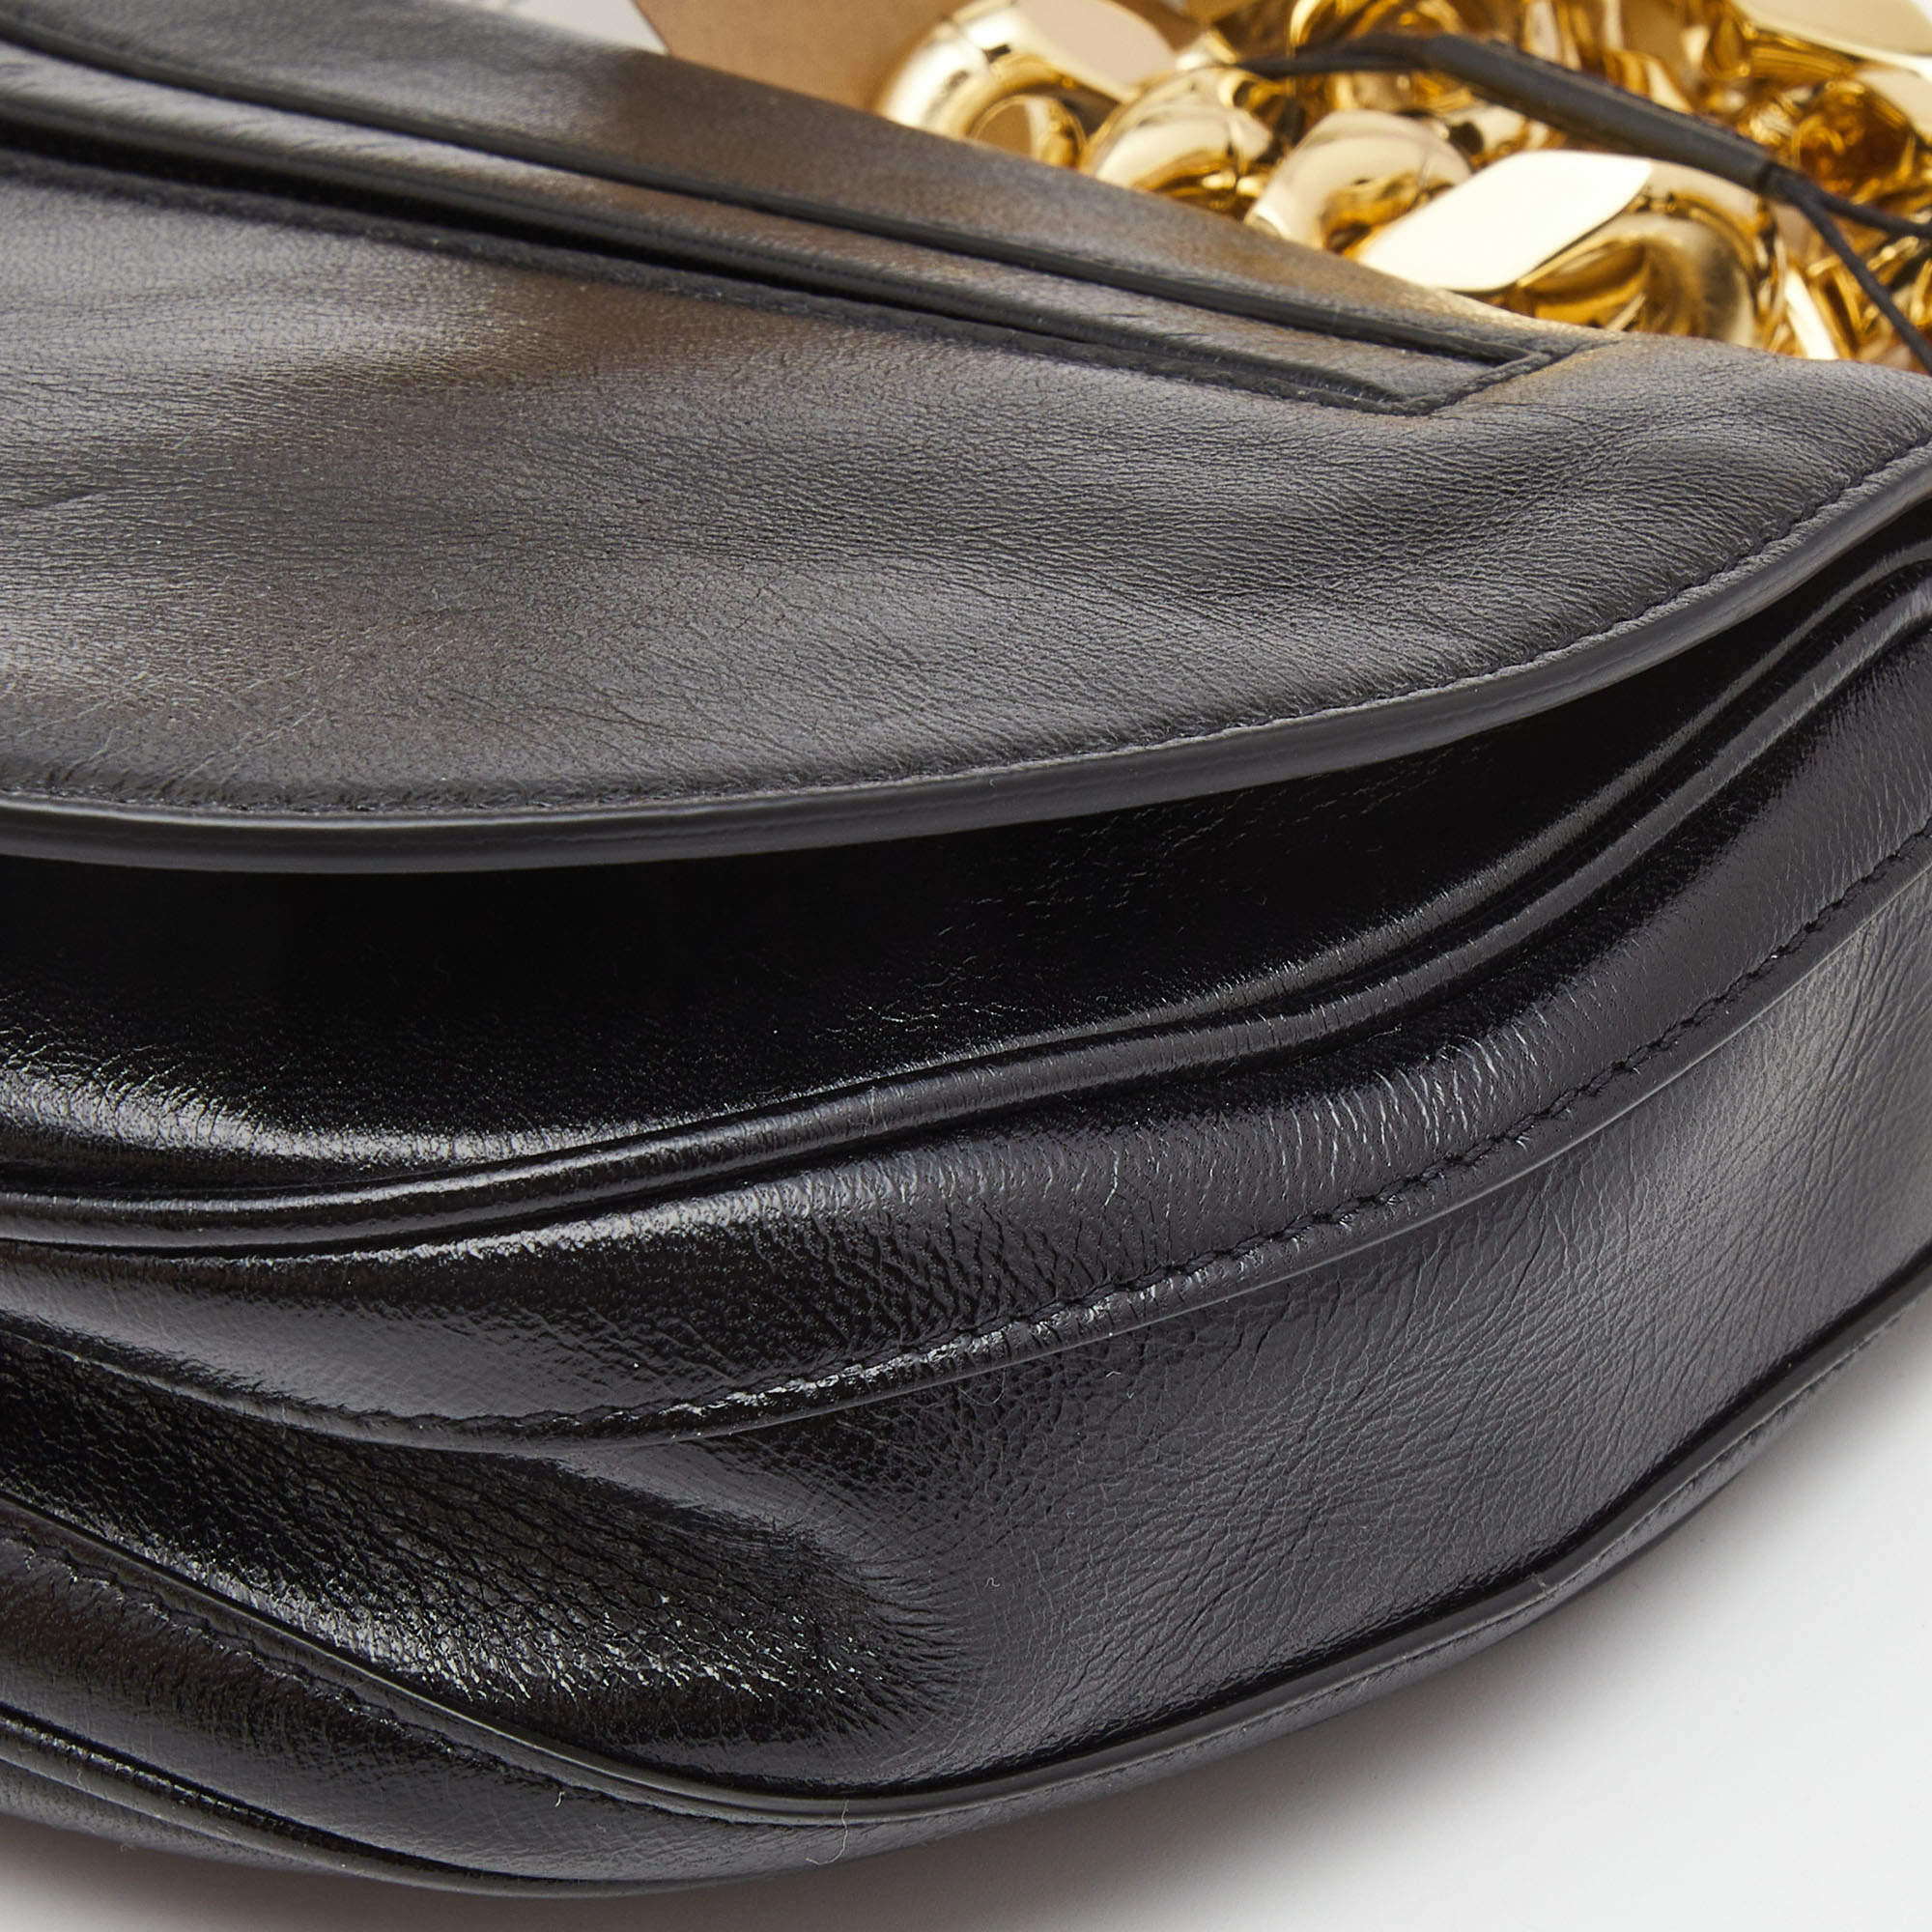 Burberry Tan Small Olympia Chain Bag – BlackSkinny